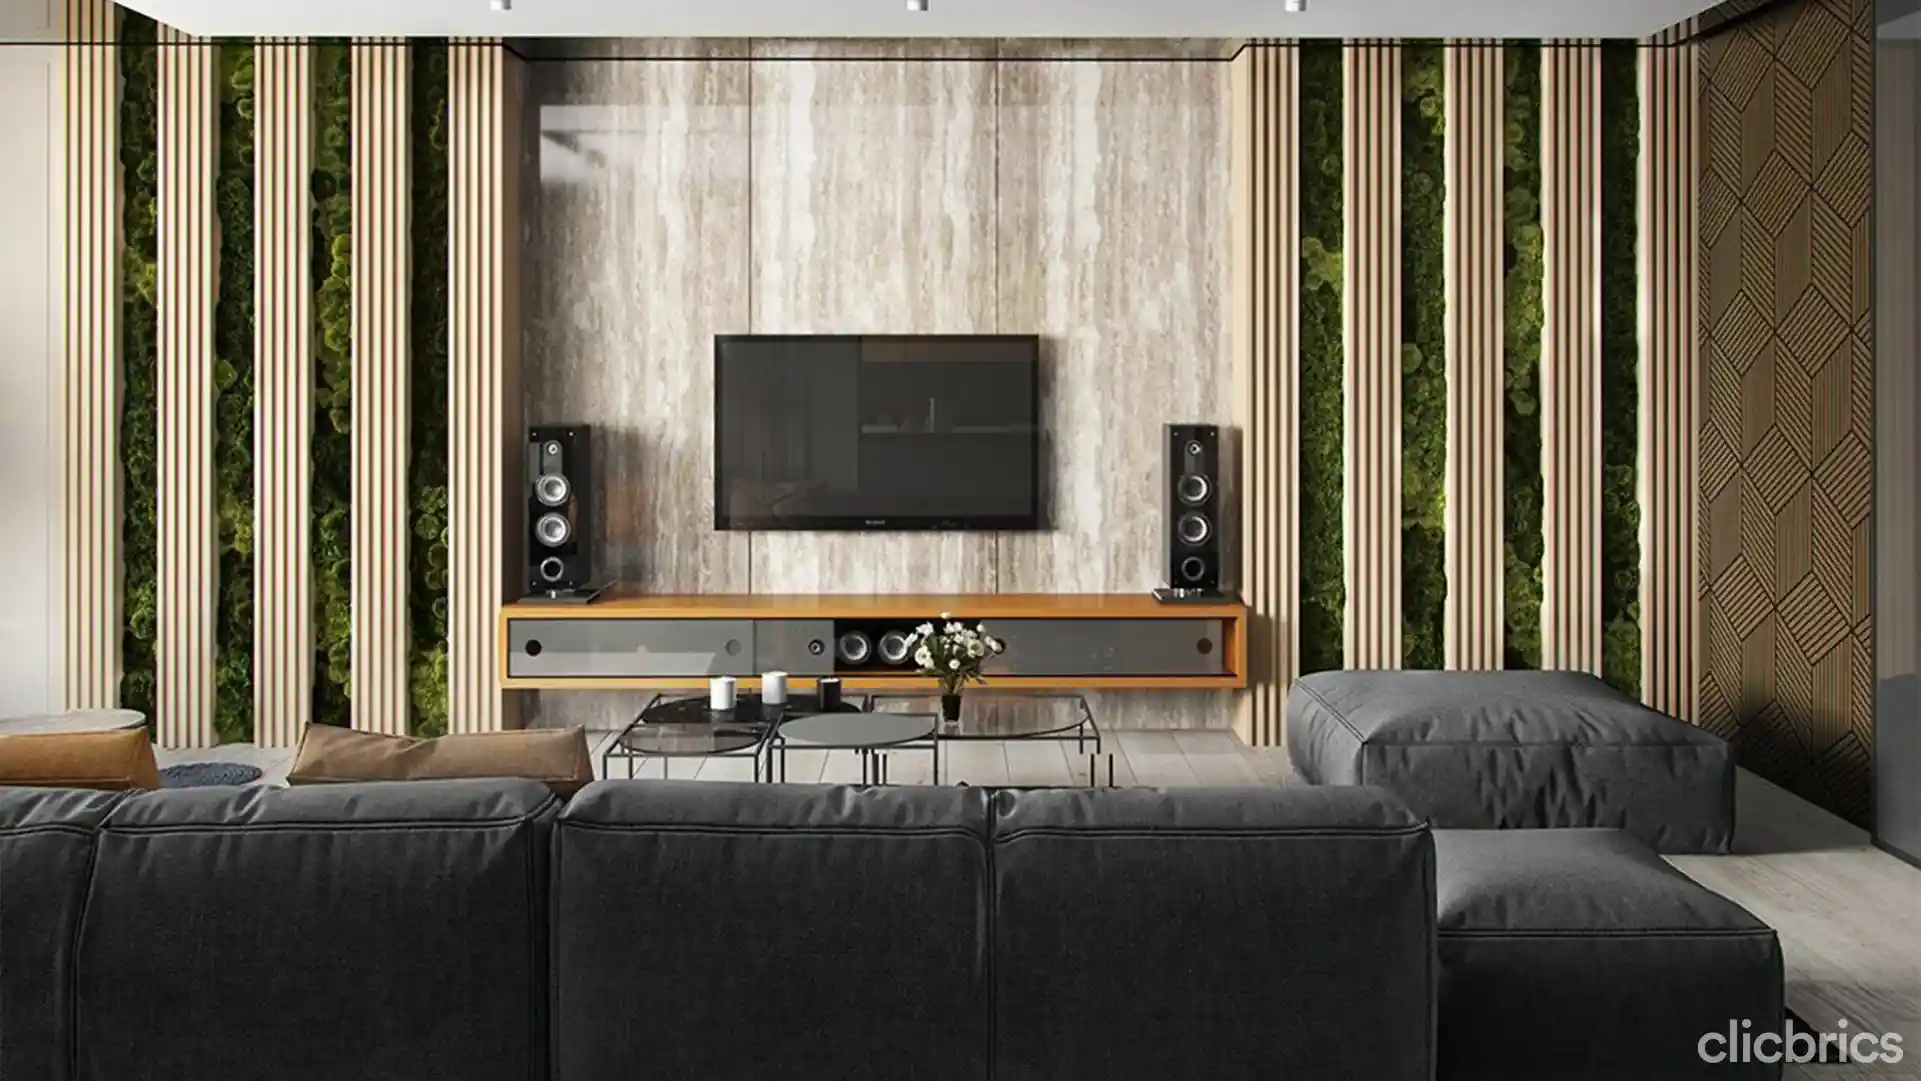 TV unit design | Bedroom tv unit design, Tv unit interior design, Tv unit  decor